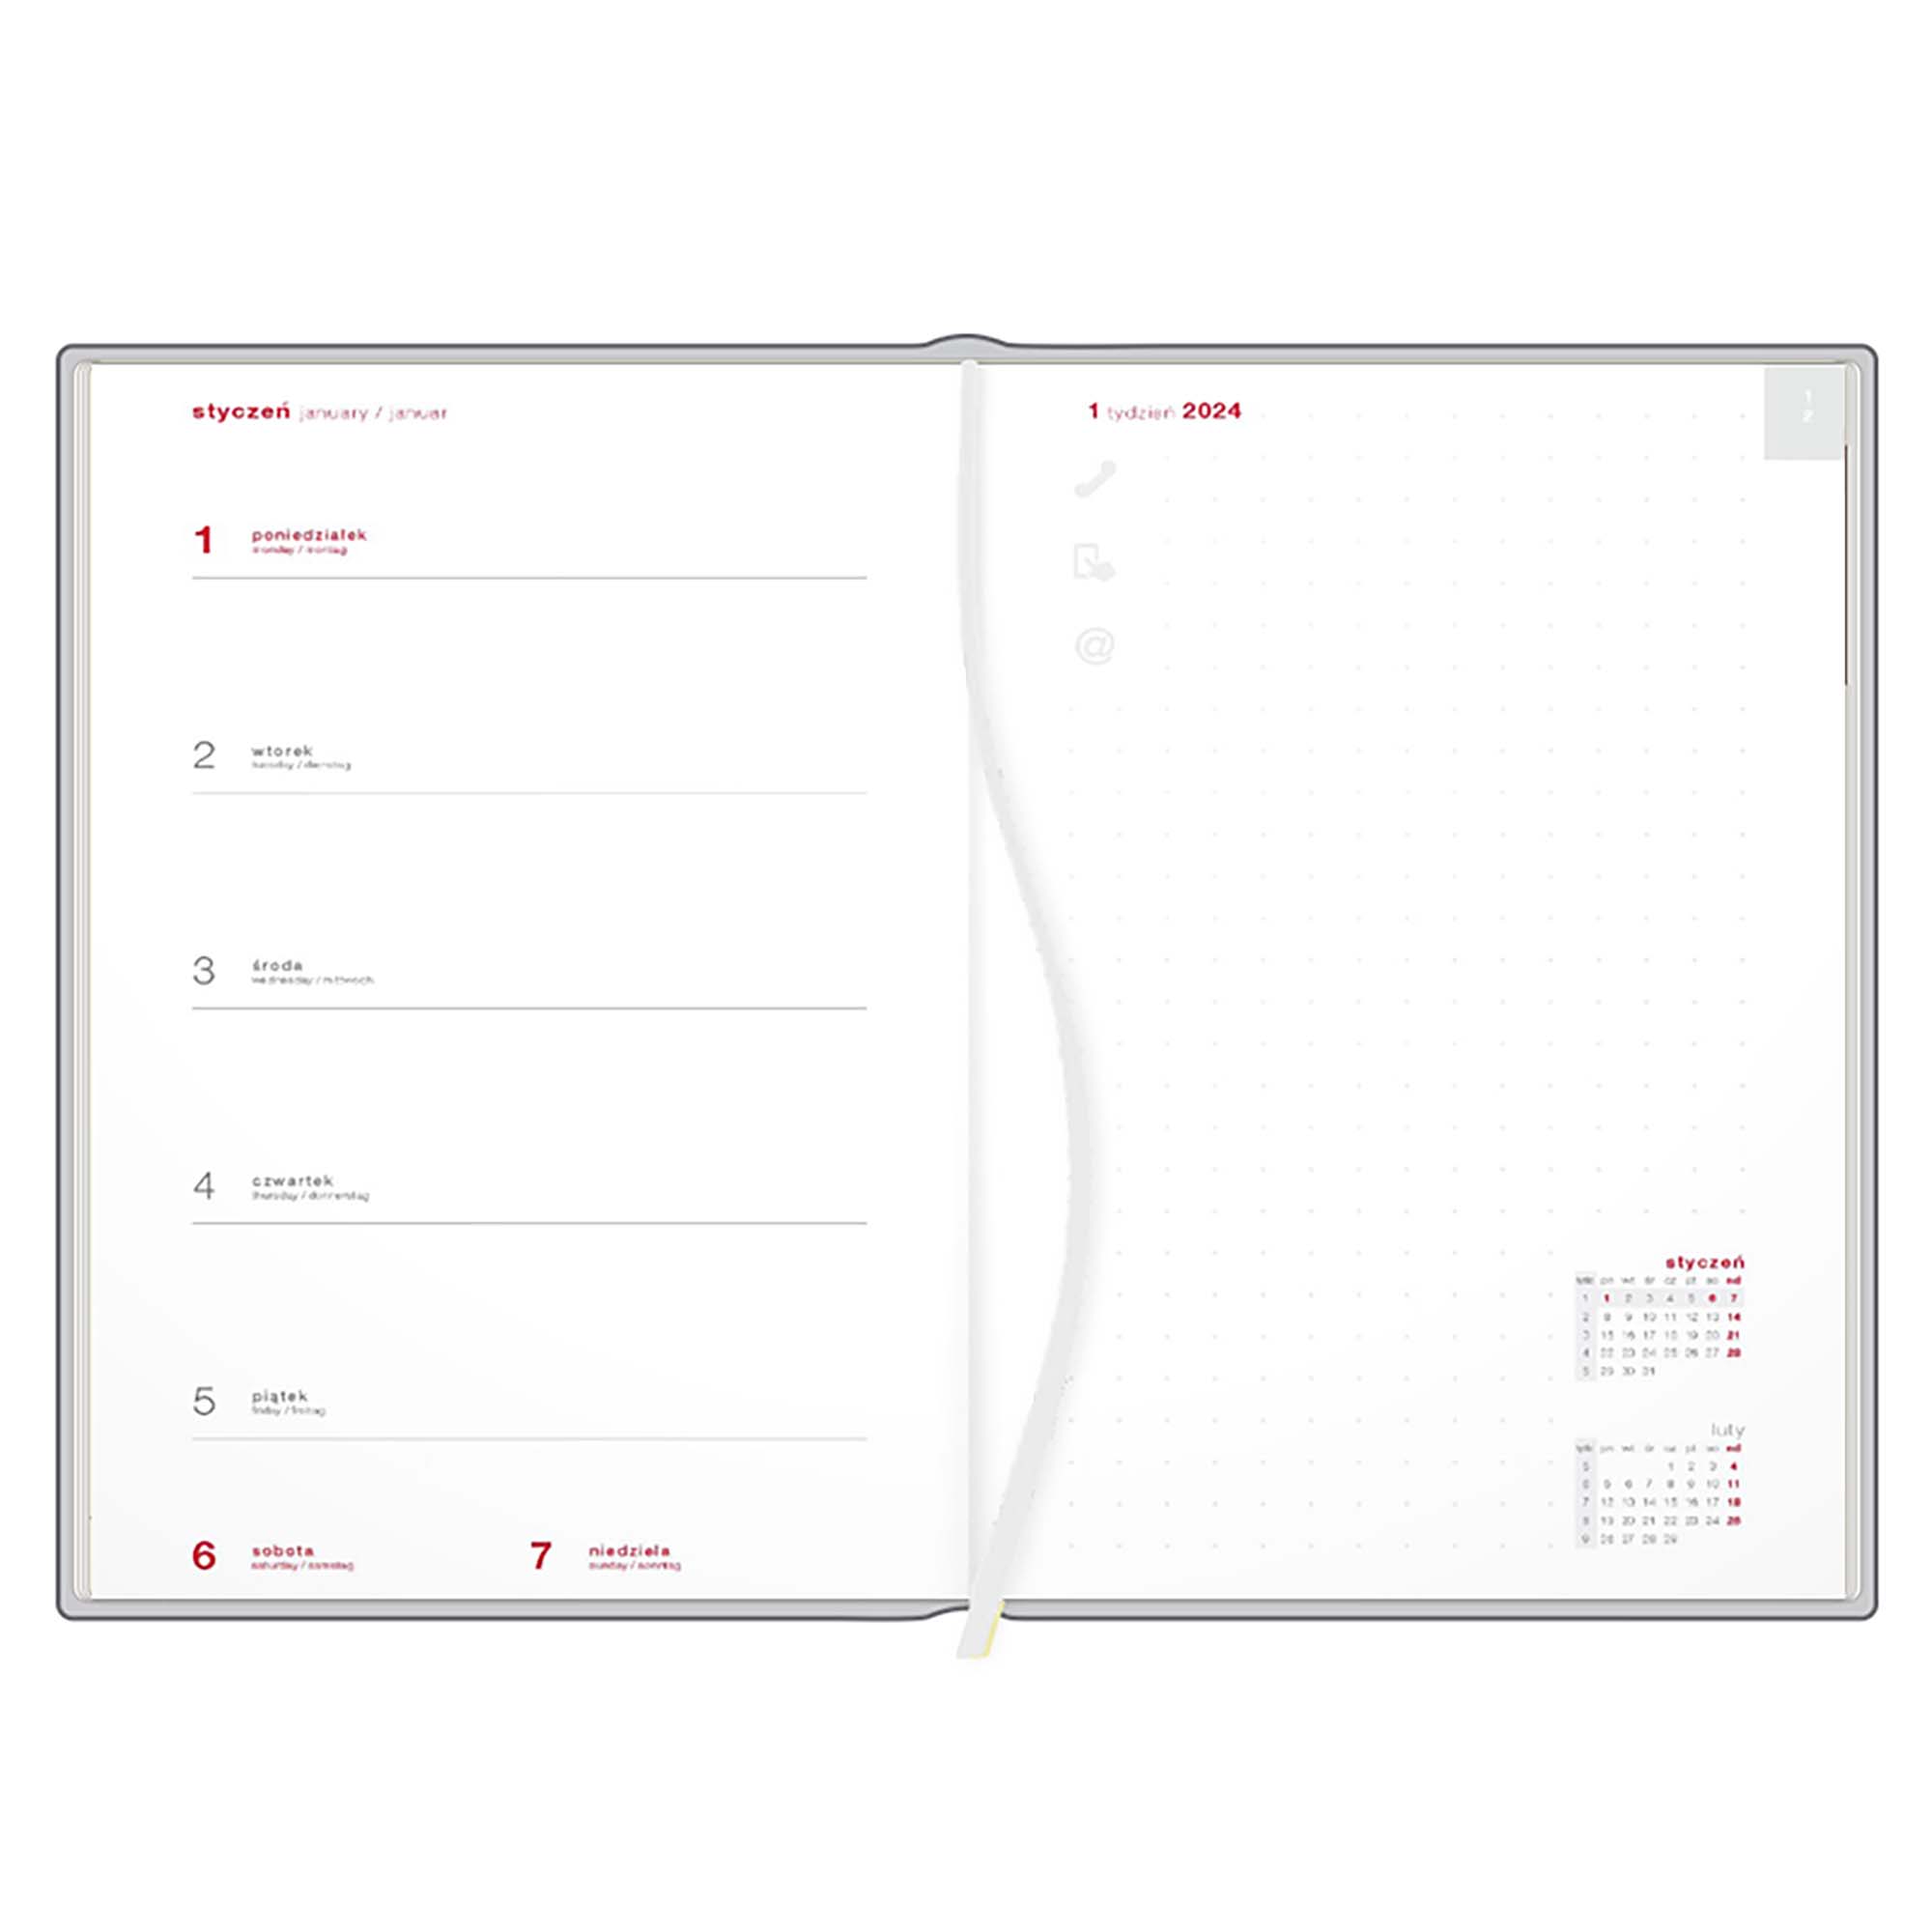 Kalendarz książkowy A4 tygodniowy z notesem, Toledo, srebrno-srebrny